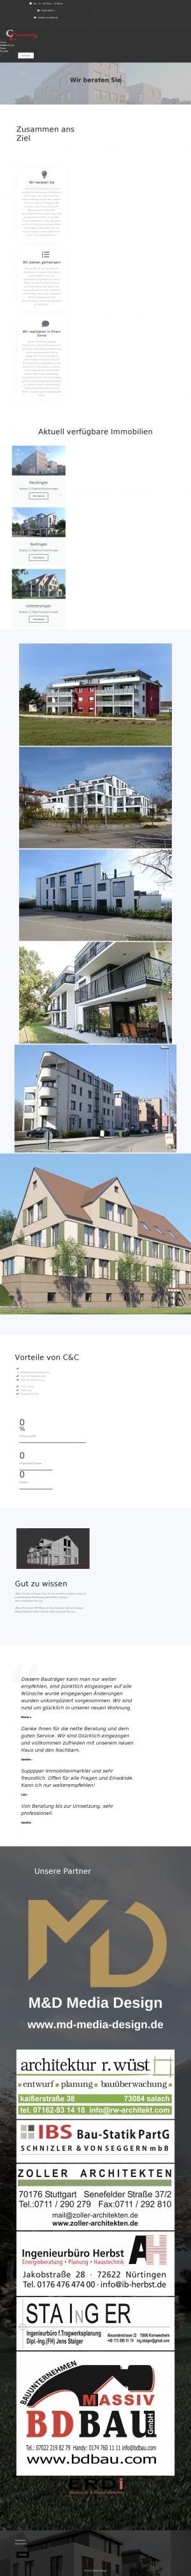 www.cc-immobilie.de